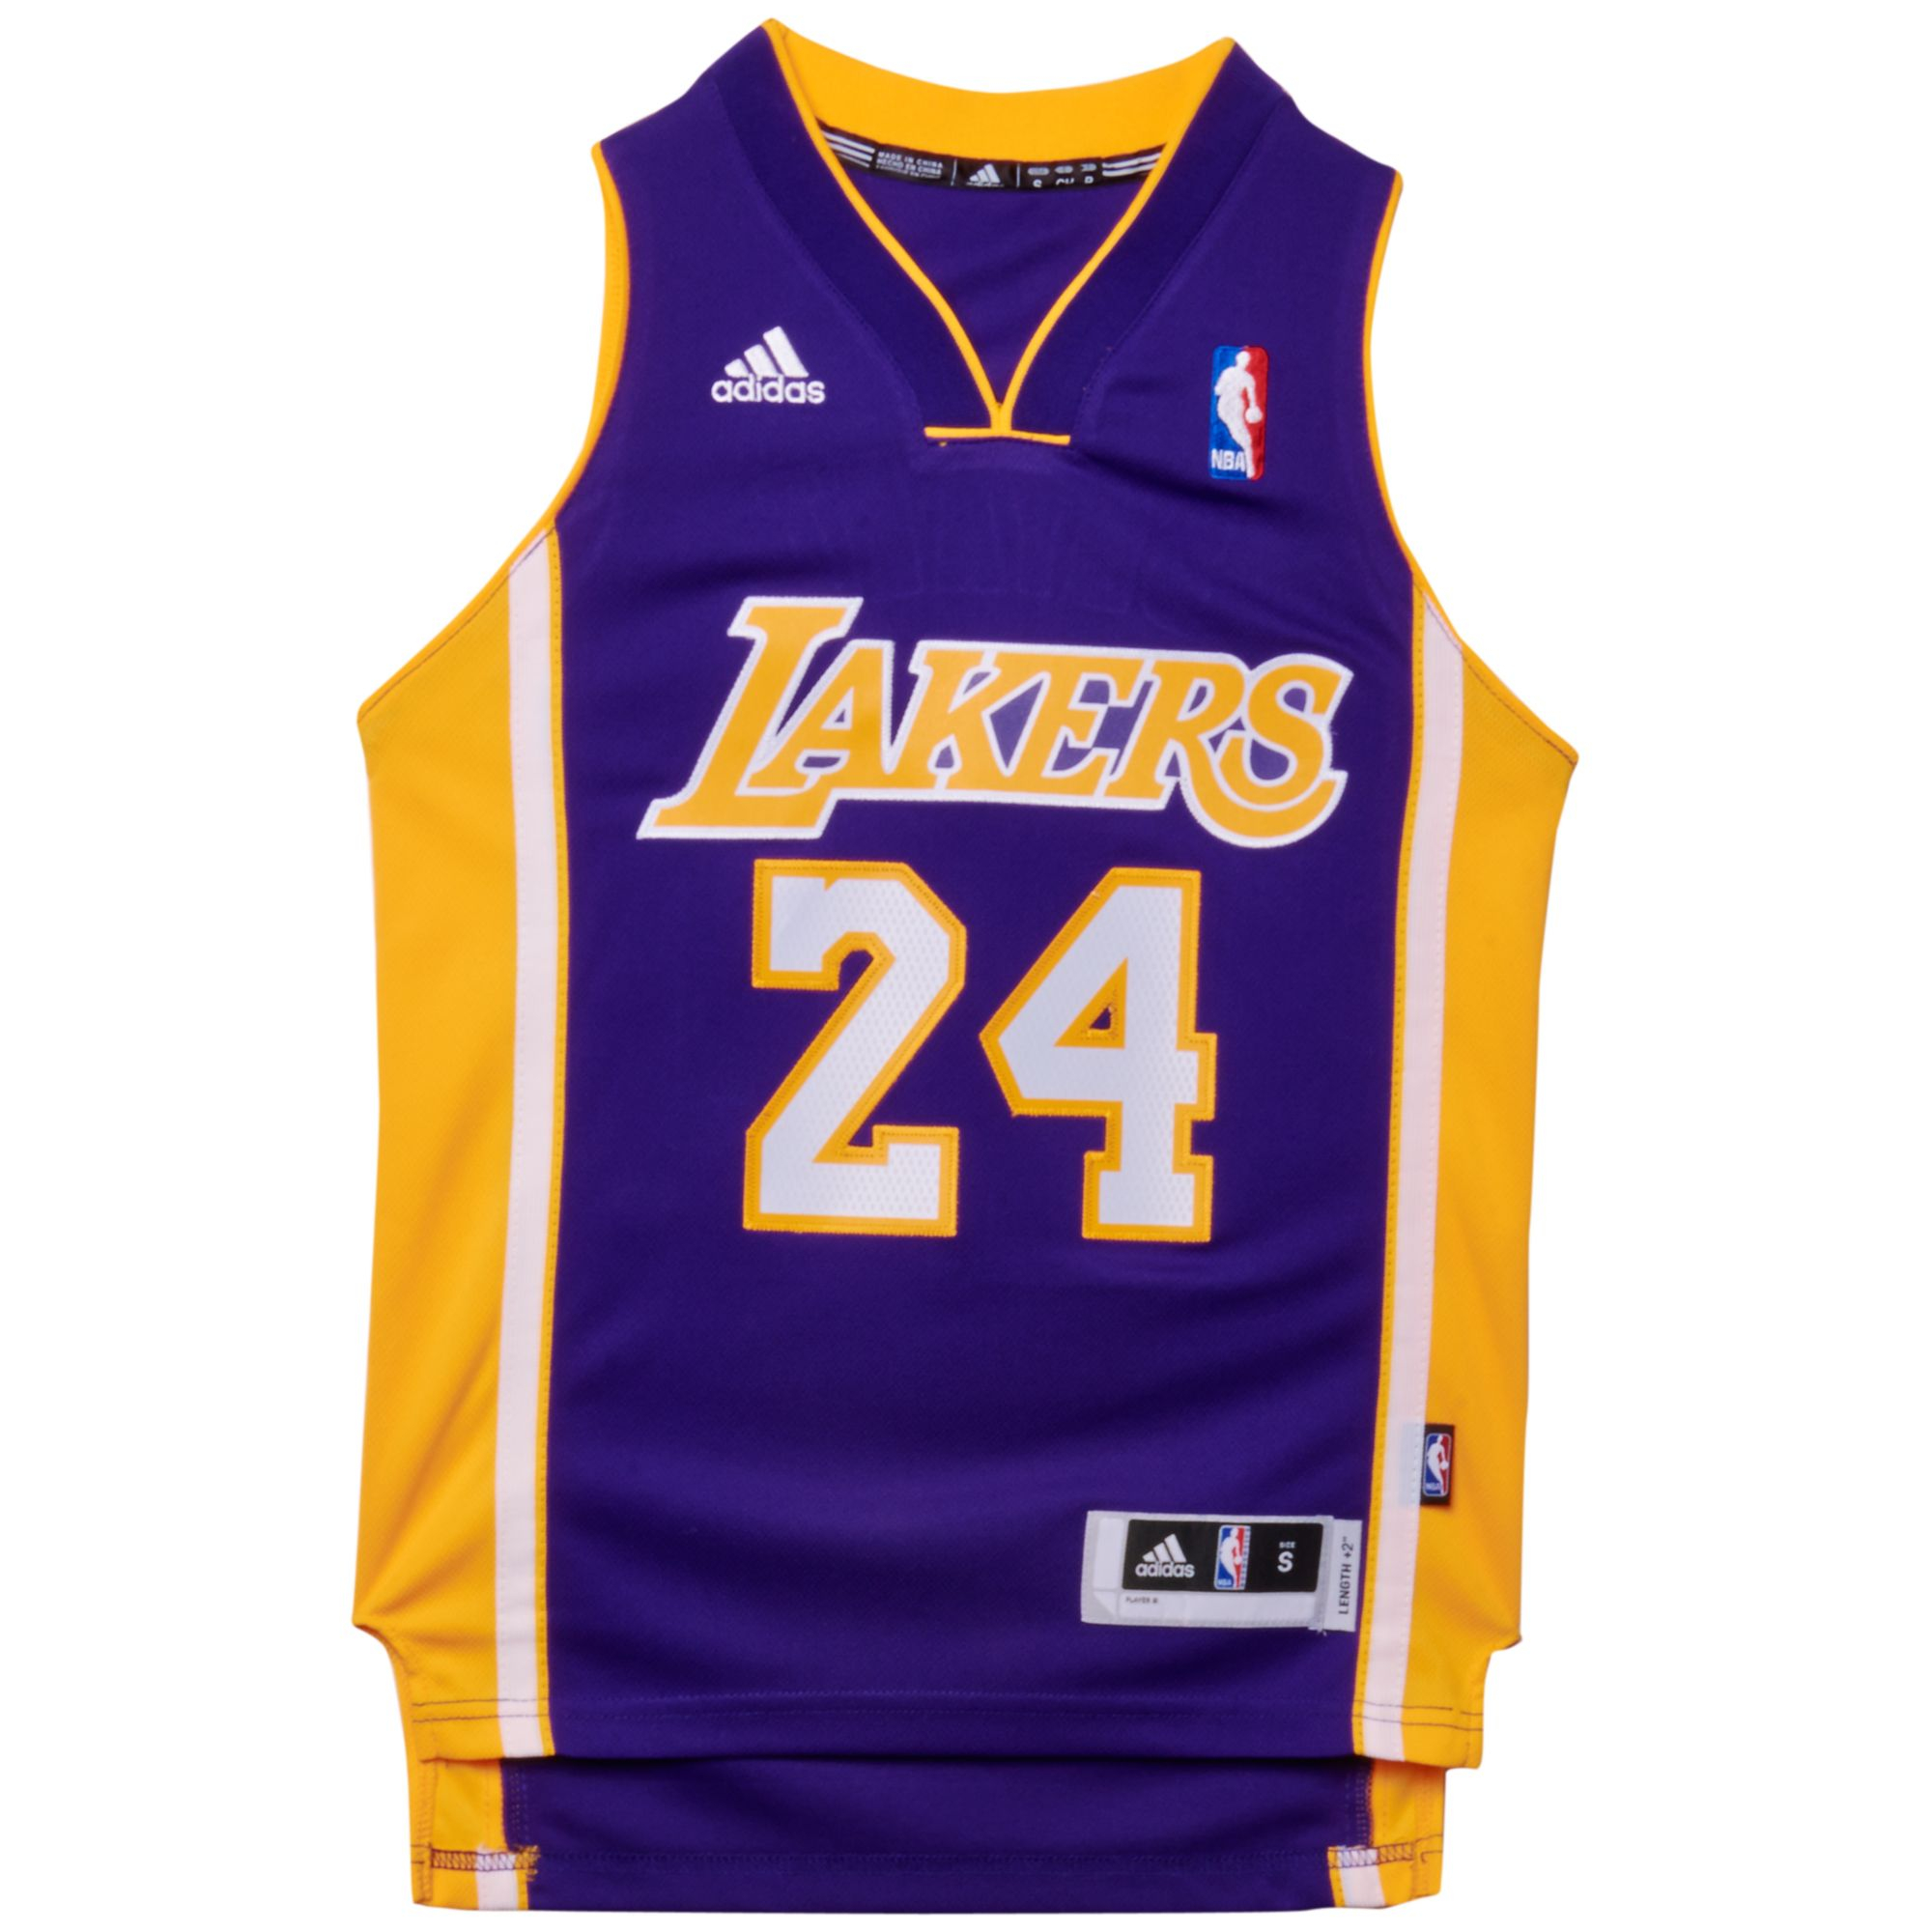 Adidas Kids Kobe Bryant Los Angeles Lakers Swingman Jersey in Purple